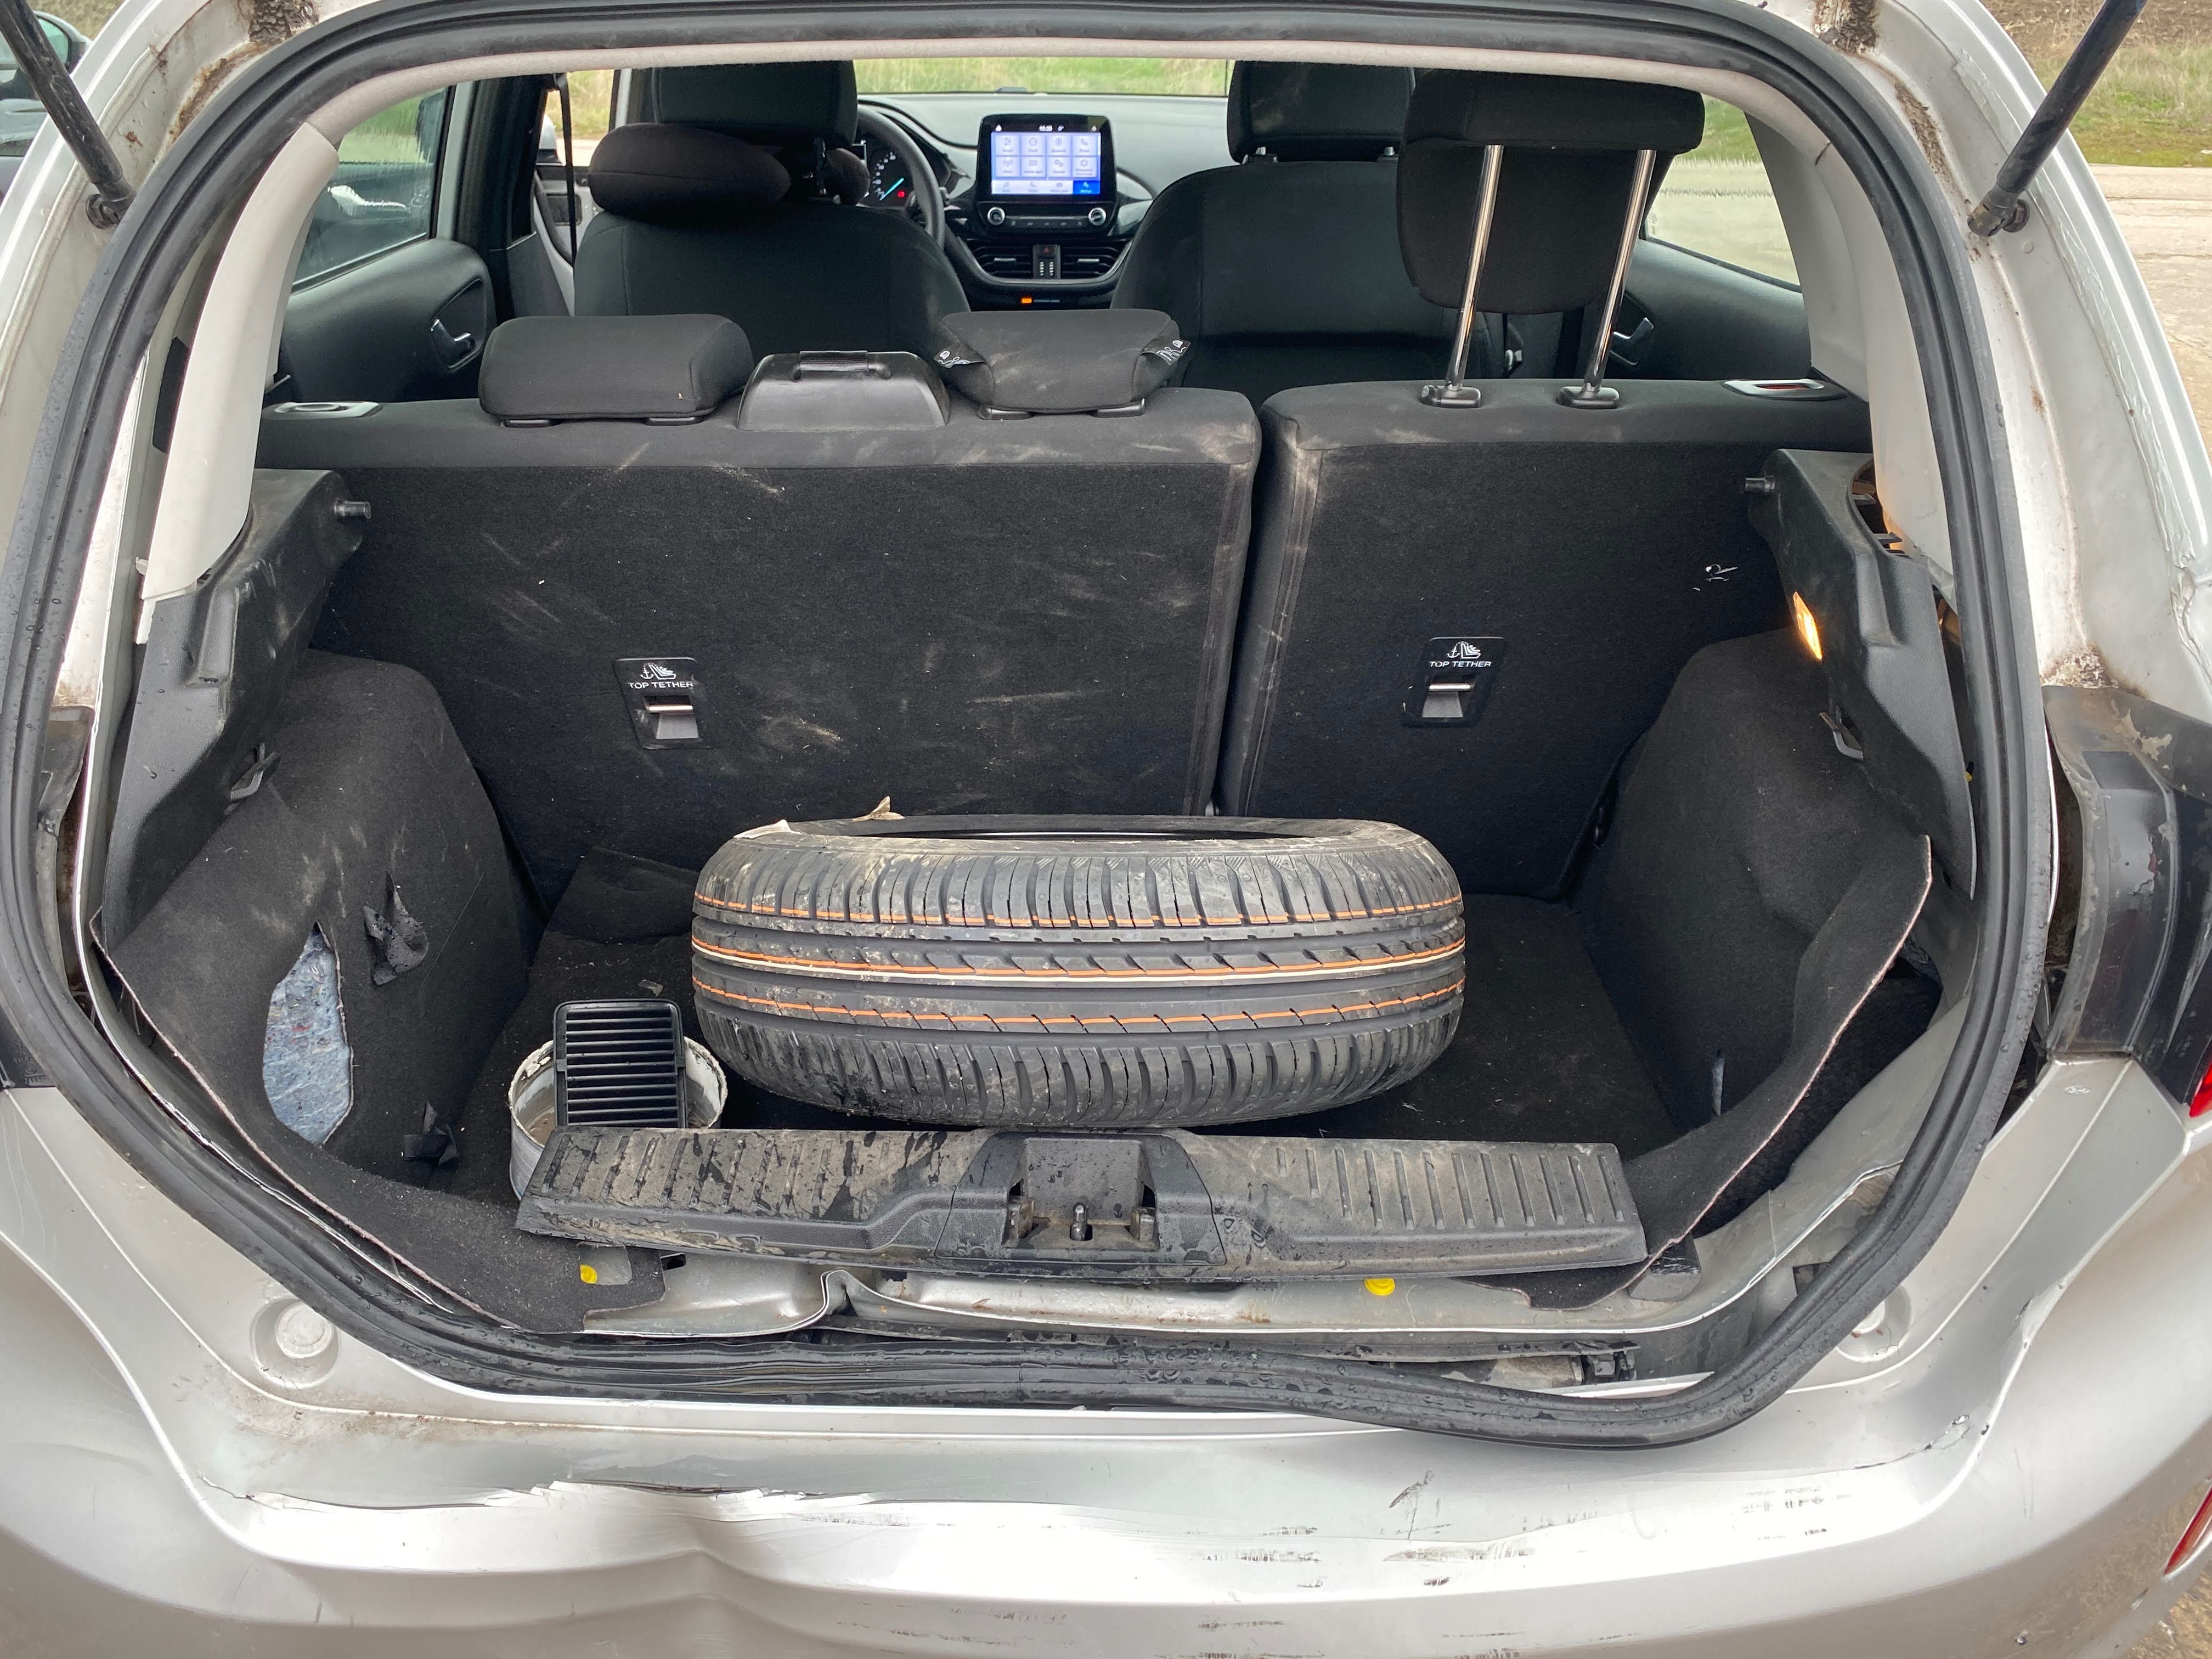 Ford Fiesta 1.5 TDCI, 85 ph., 6 sp., engine XUJN, 99 000 km., 2019